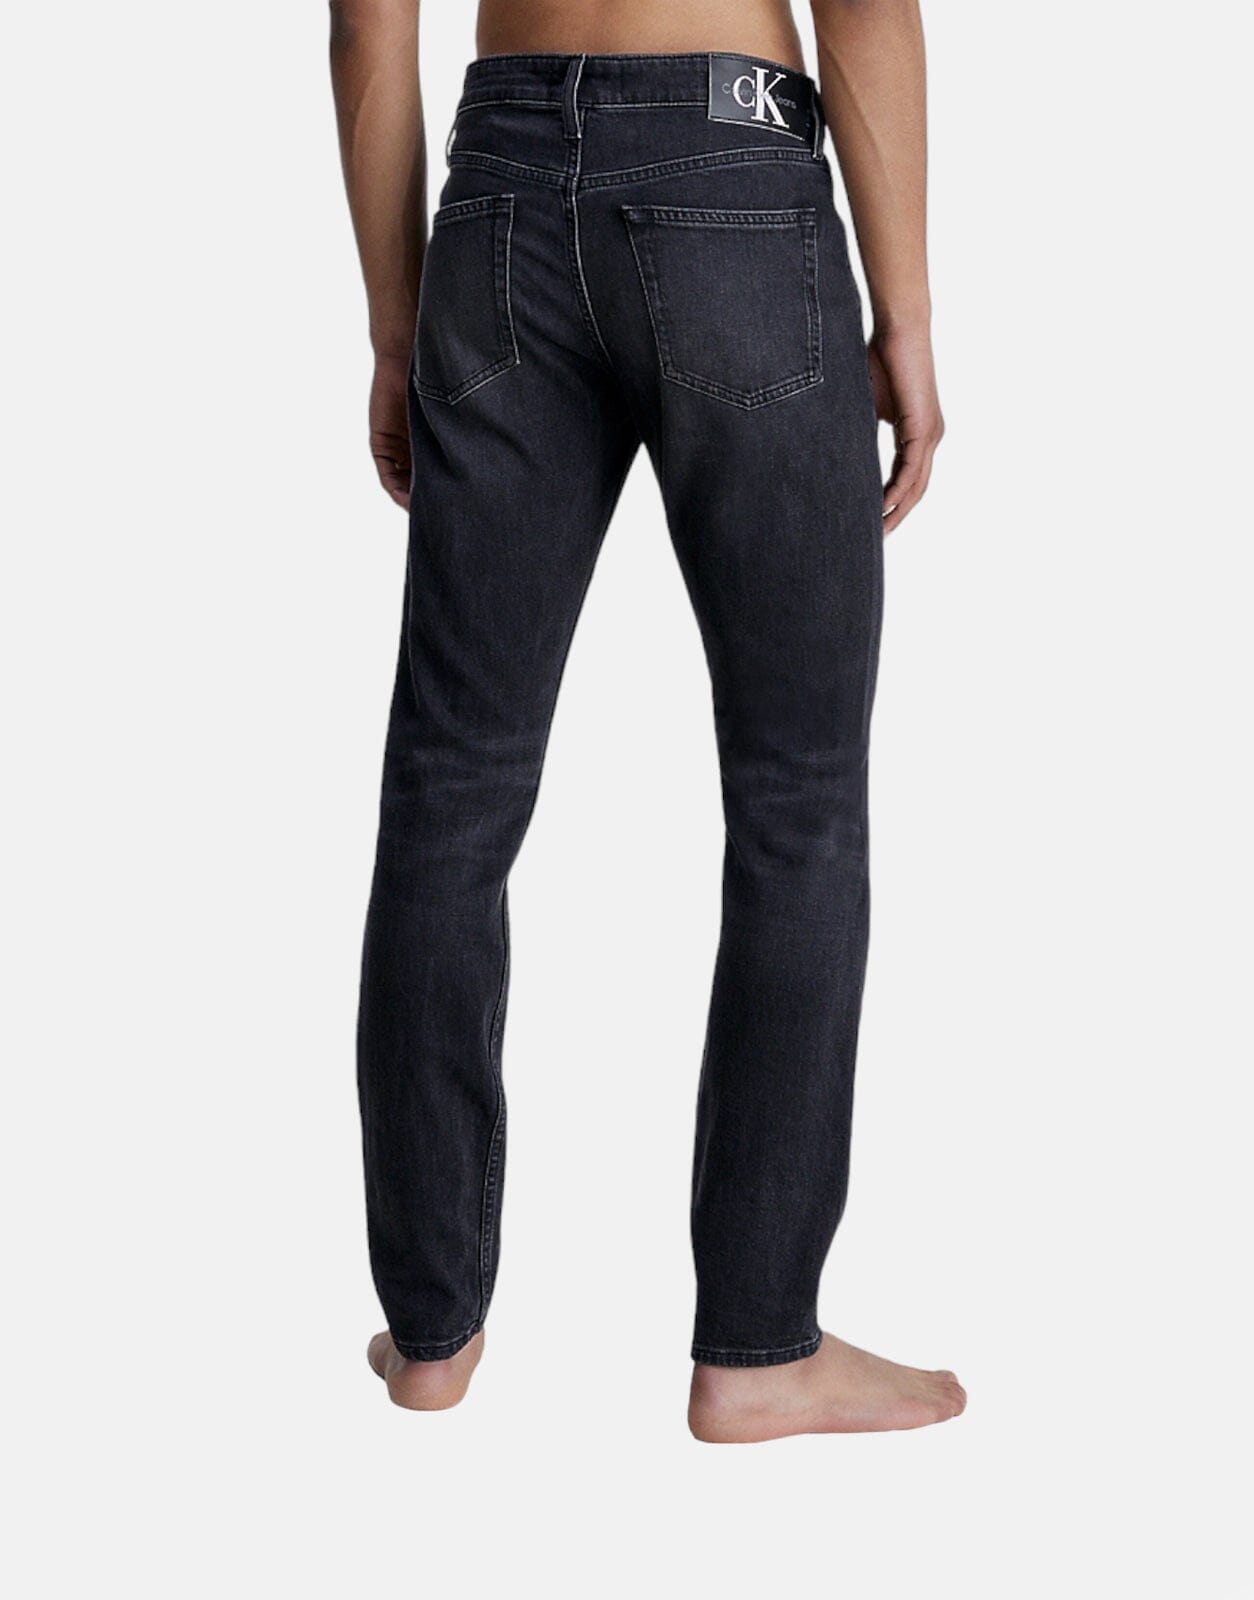 Calvin Klein Slim Taper Black Jeans - Subwear